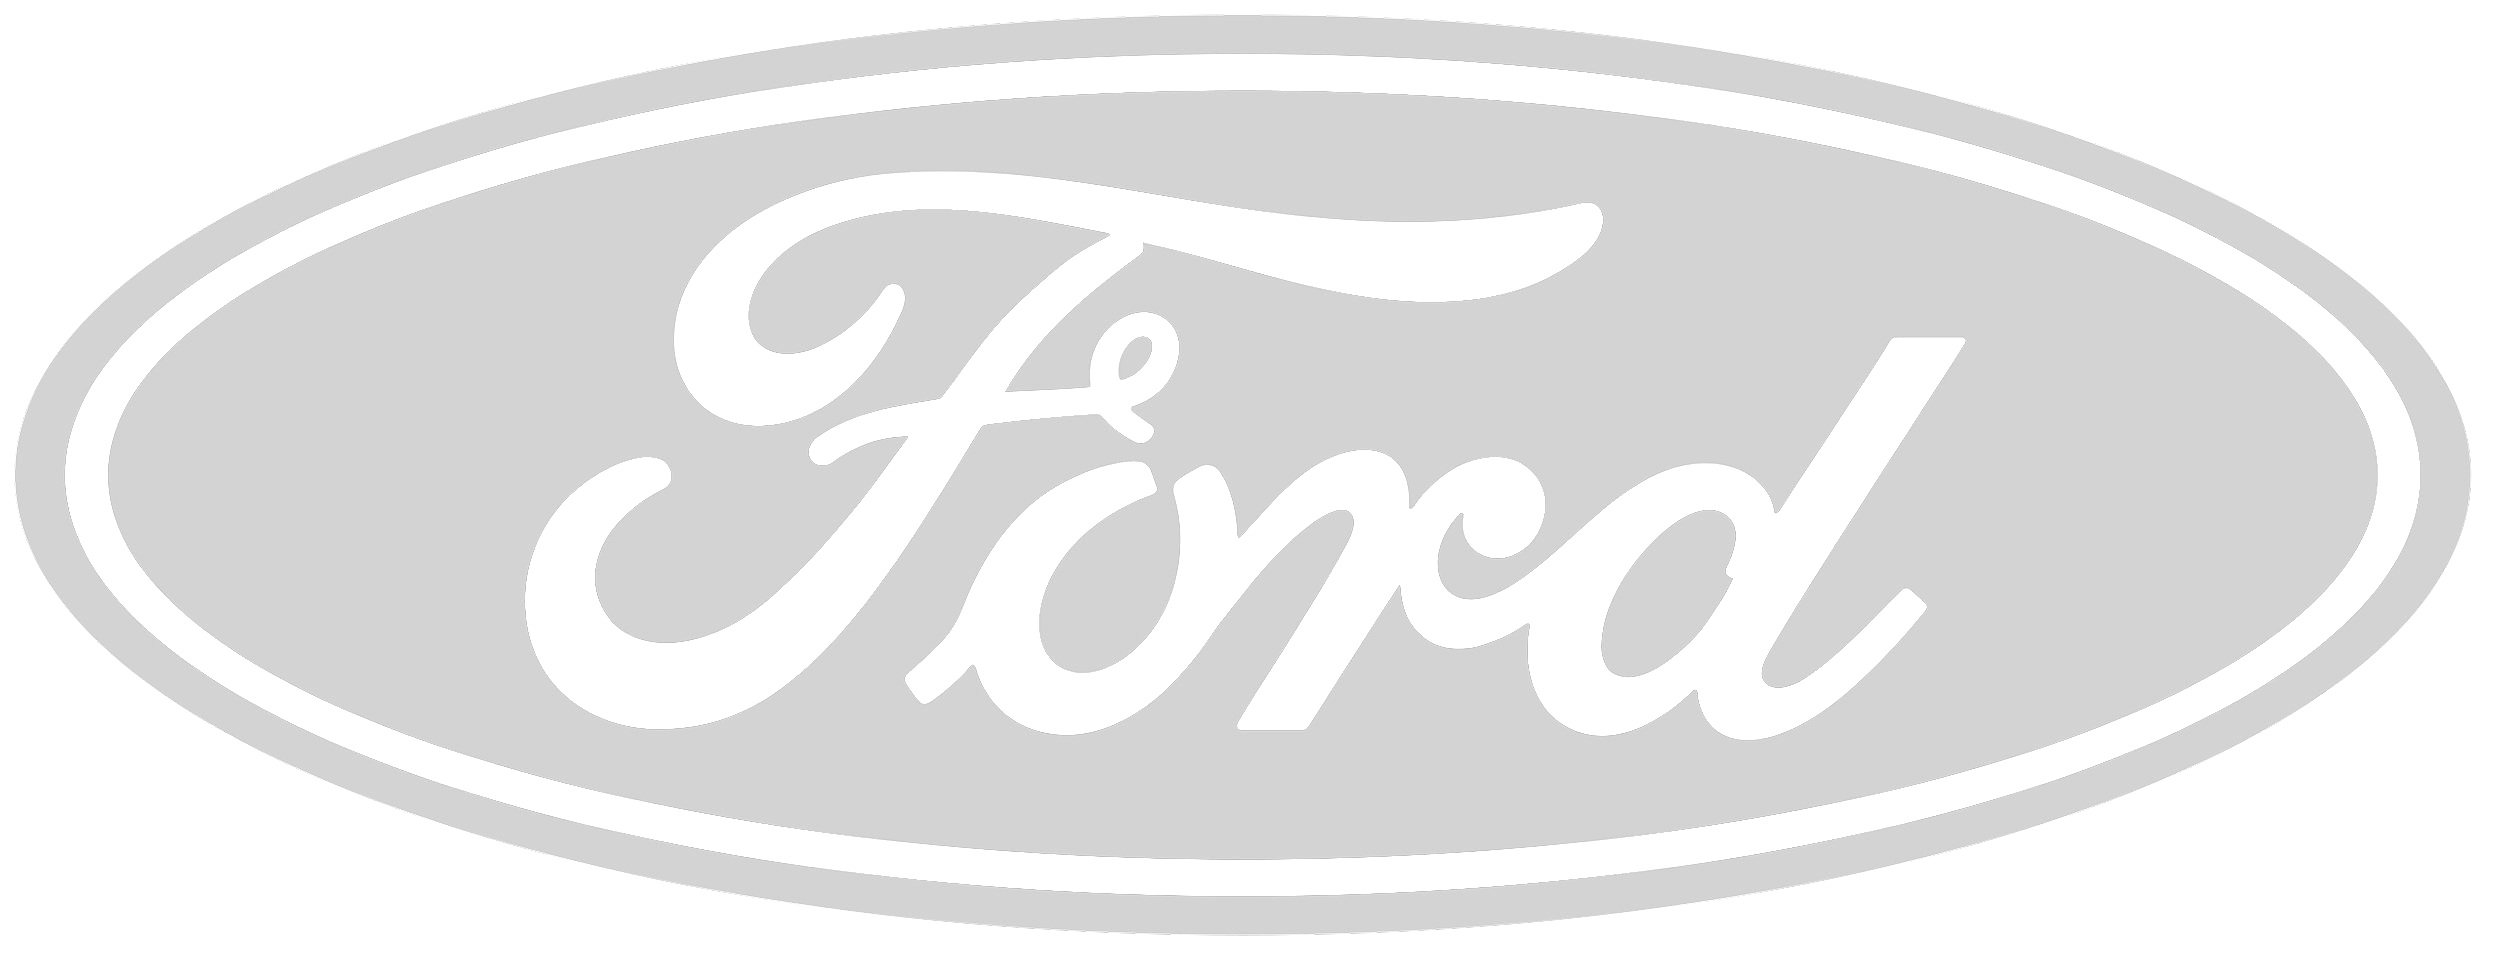 Ford_logo_flat.svg.jpg